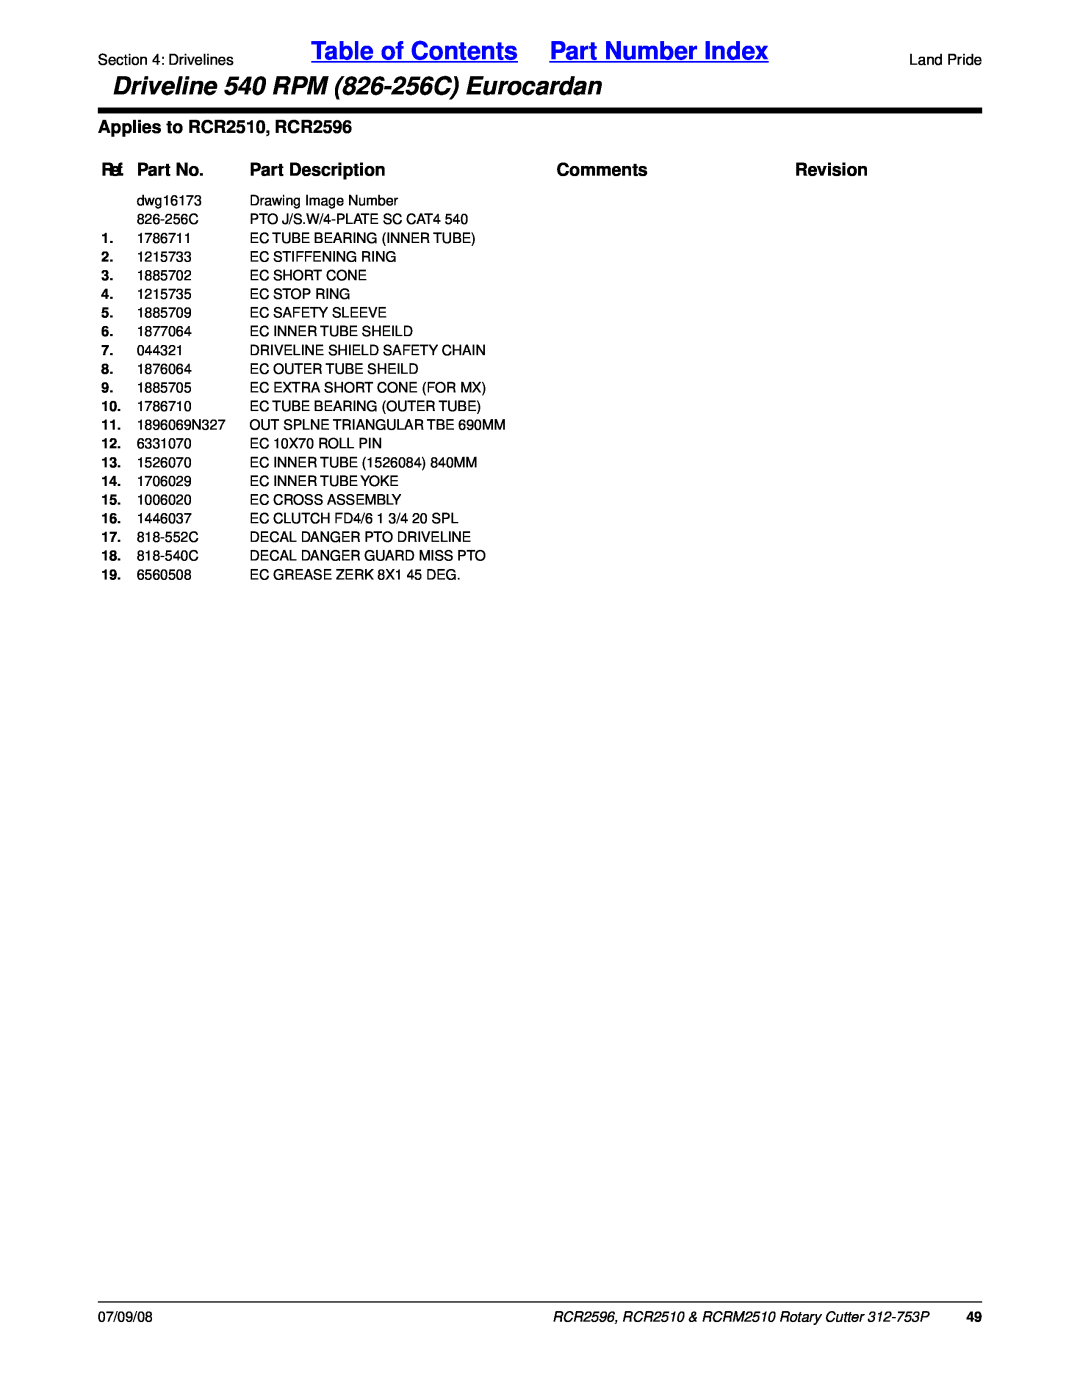 Land Pride RCRM2510 Table of Contents Part Number Index, Driveline 540 RPM 826-256CEurocardan, Applies to RCR2510, RCR2596 